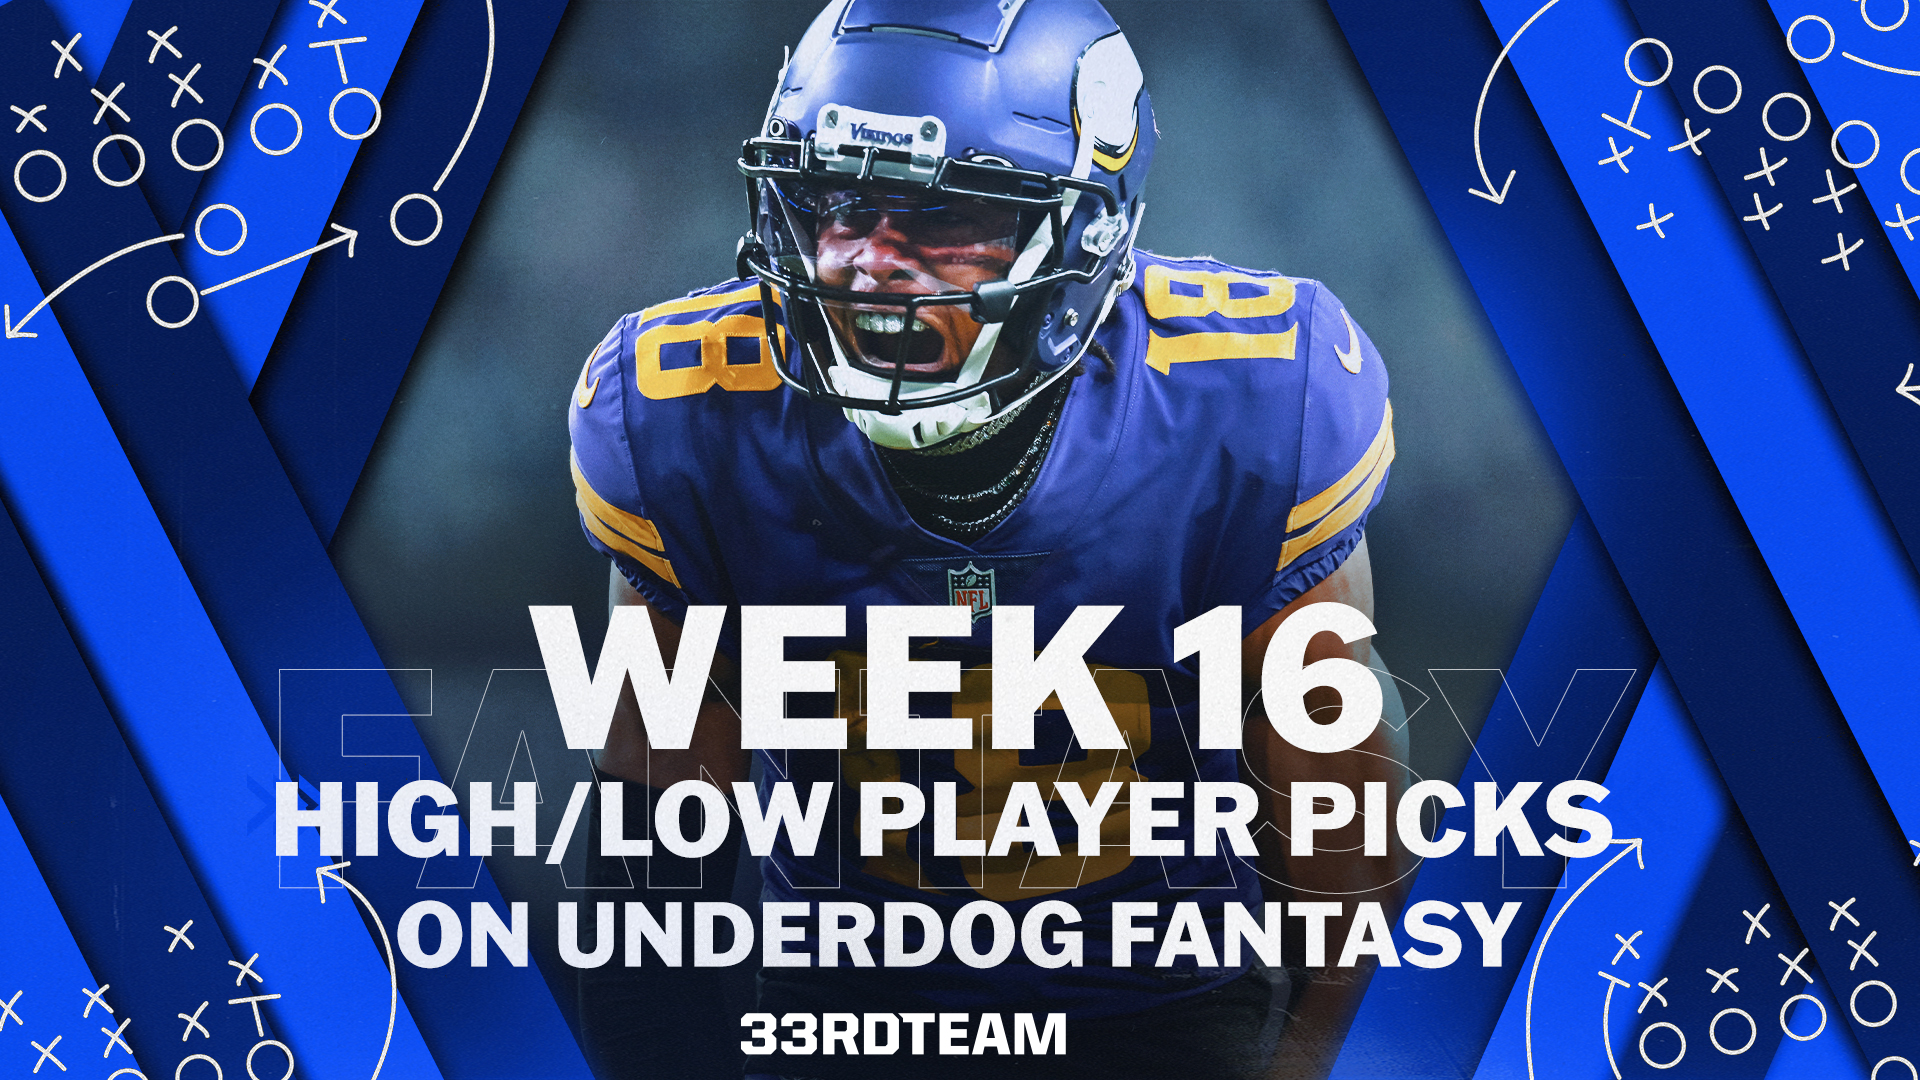 Week 16 High/Low Underdog Fantasy Picks